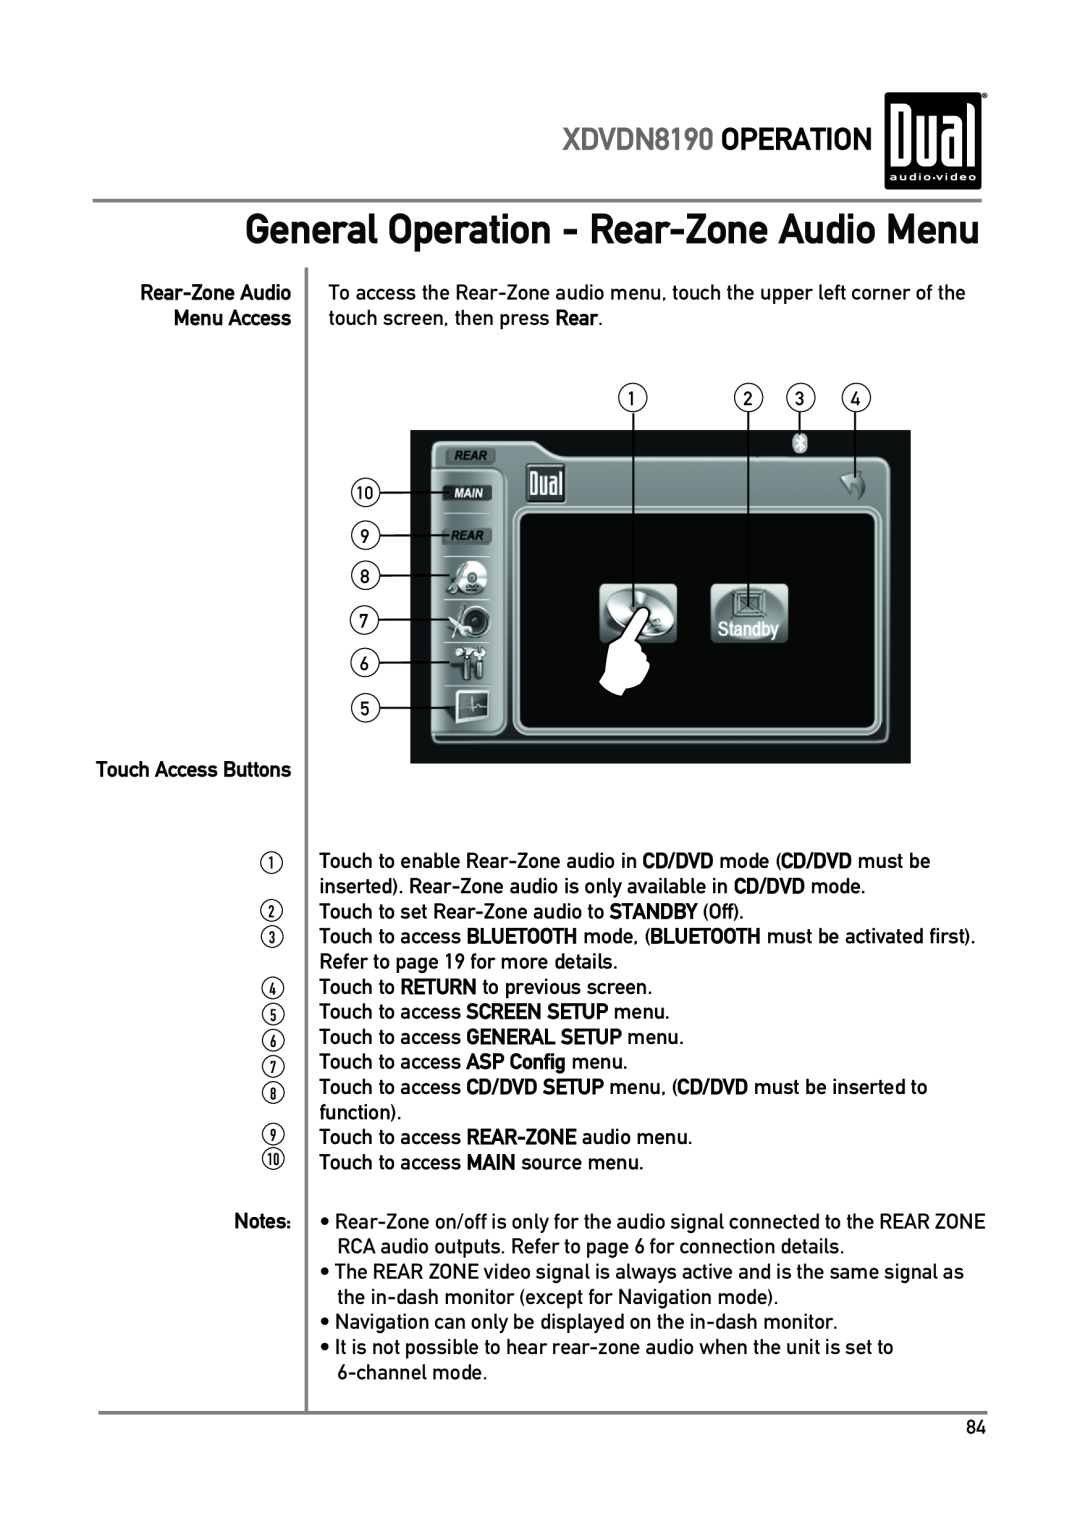 Dual owner manual General Operation - Rear-ZoneAudio Menu, XDVDN8190 OPERATION, Notes 